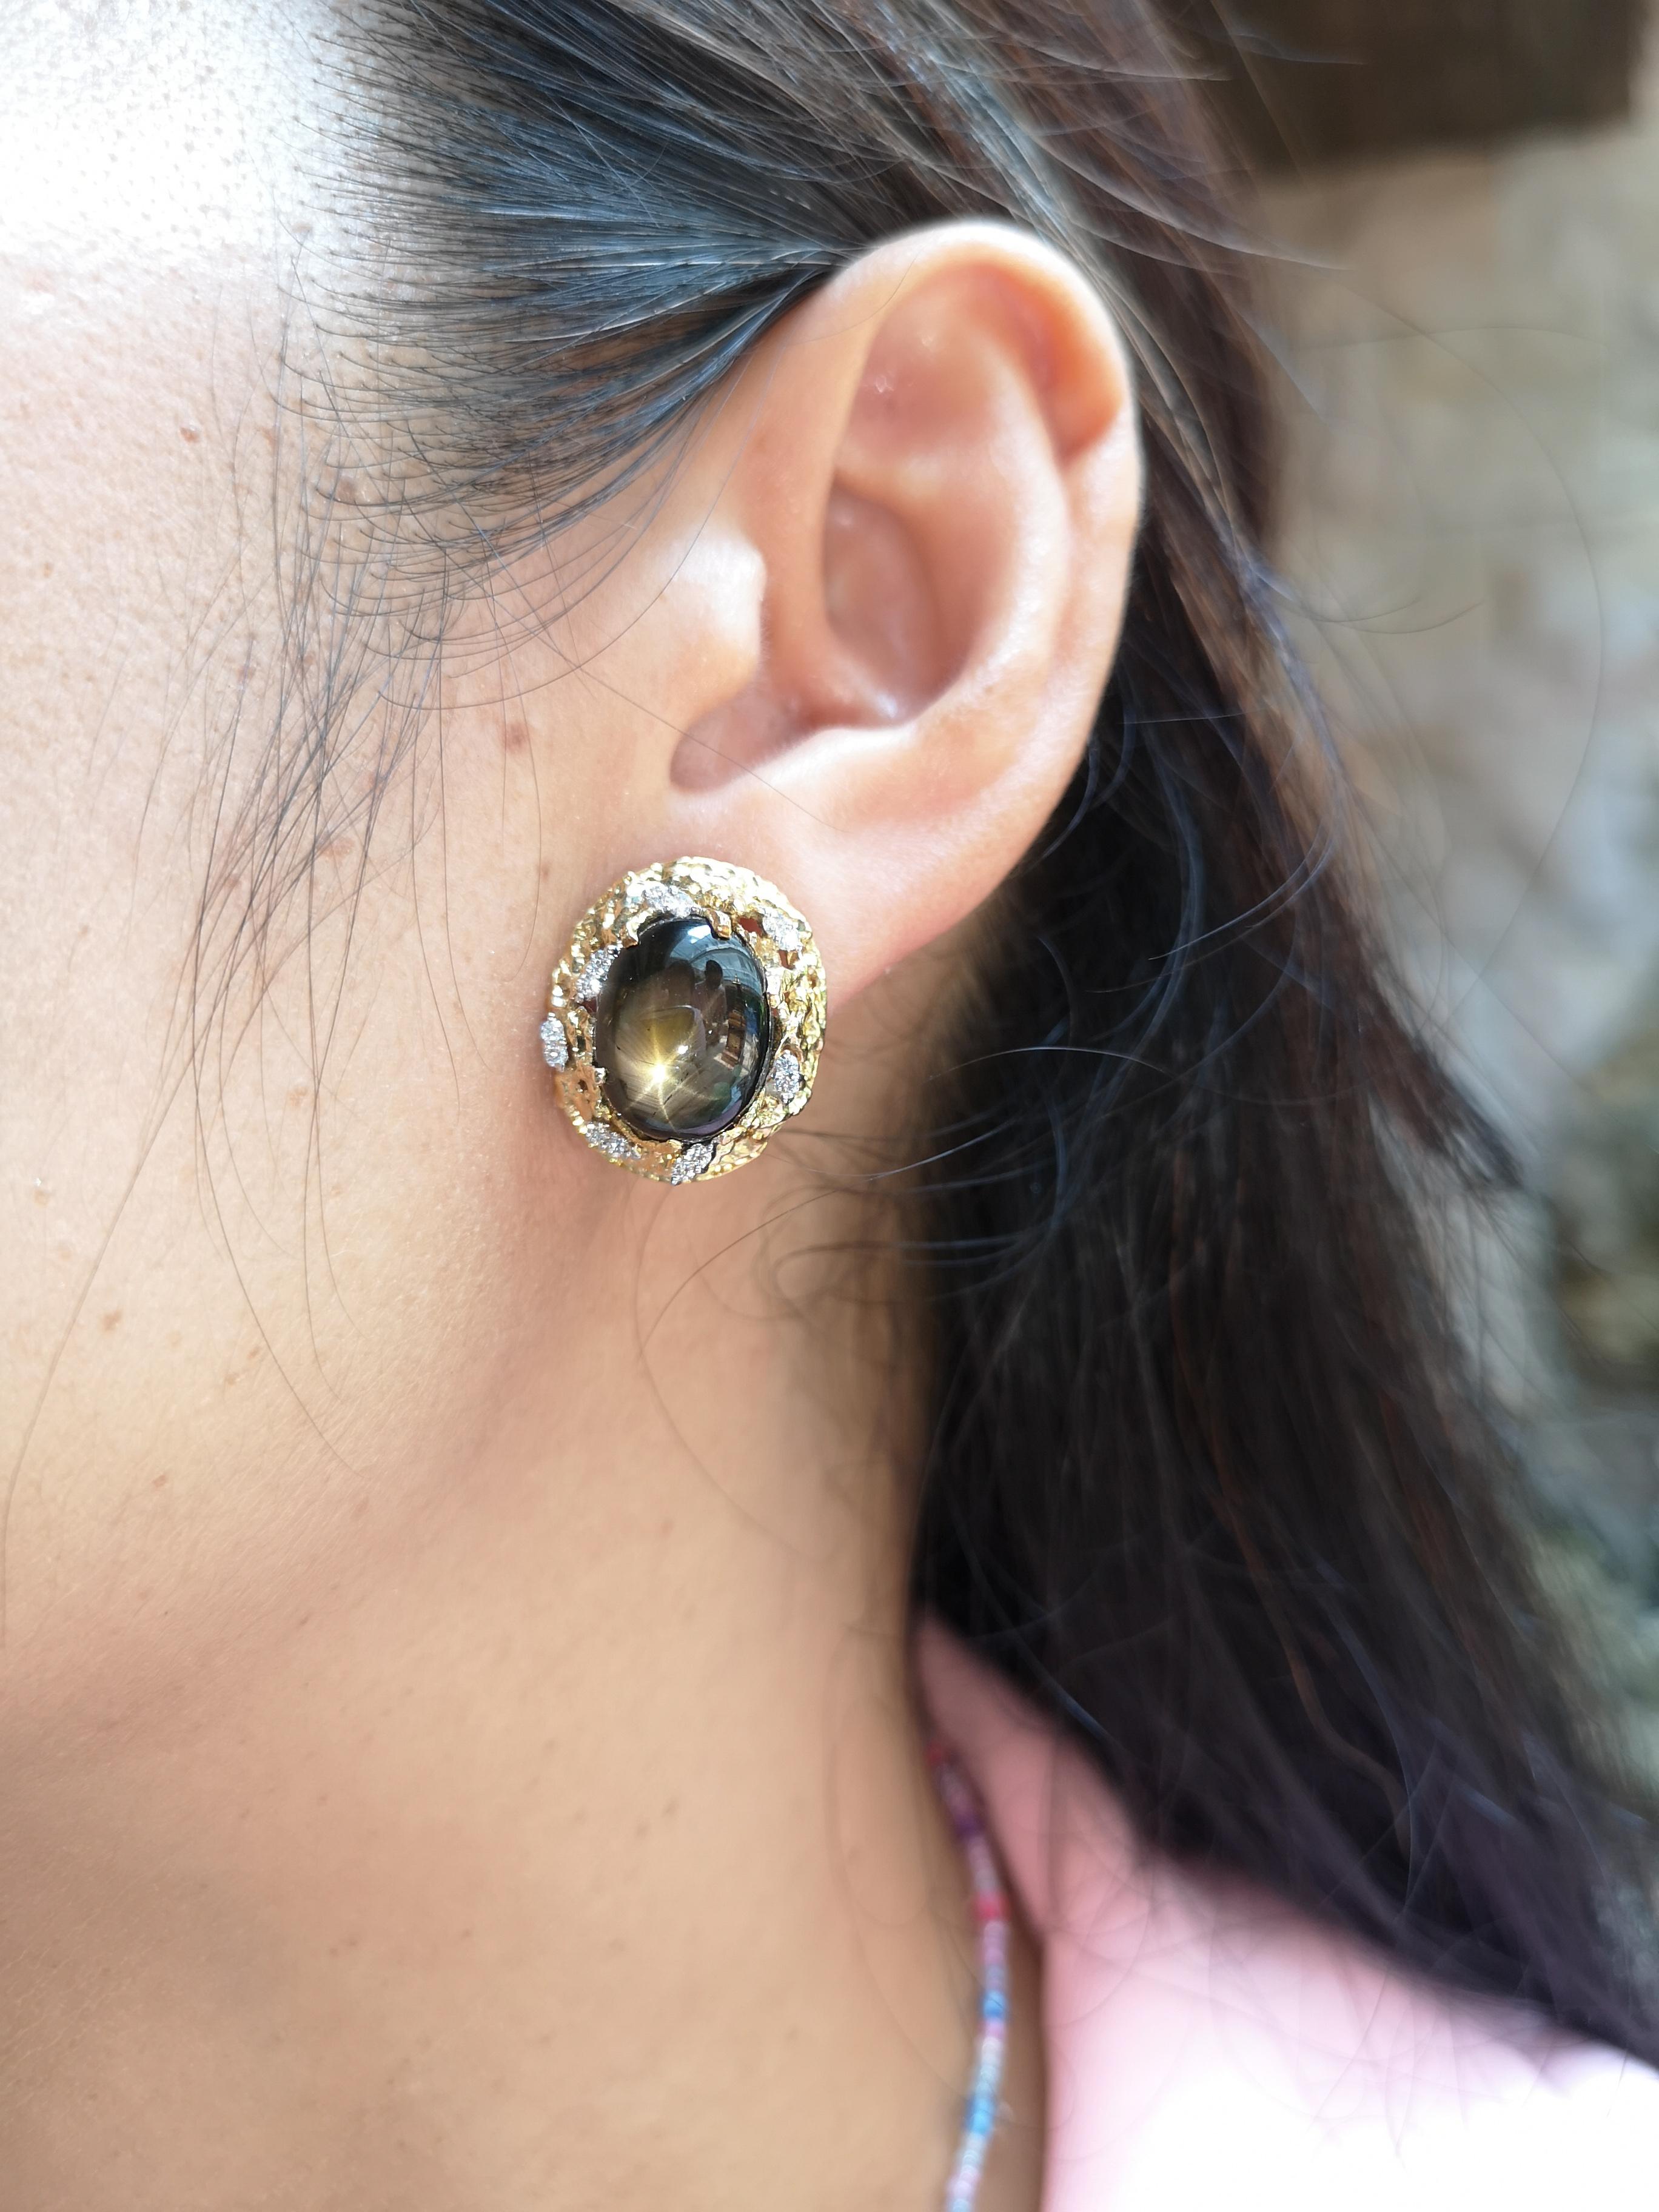 Black Star Sapphire 16.76 carats with Diamond 0.31 carat Earrings set in 18 Karat Gold Settings

Width: 1.6 cm
Length: 1.9 cm 

